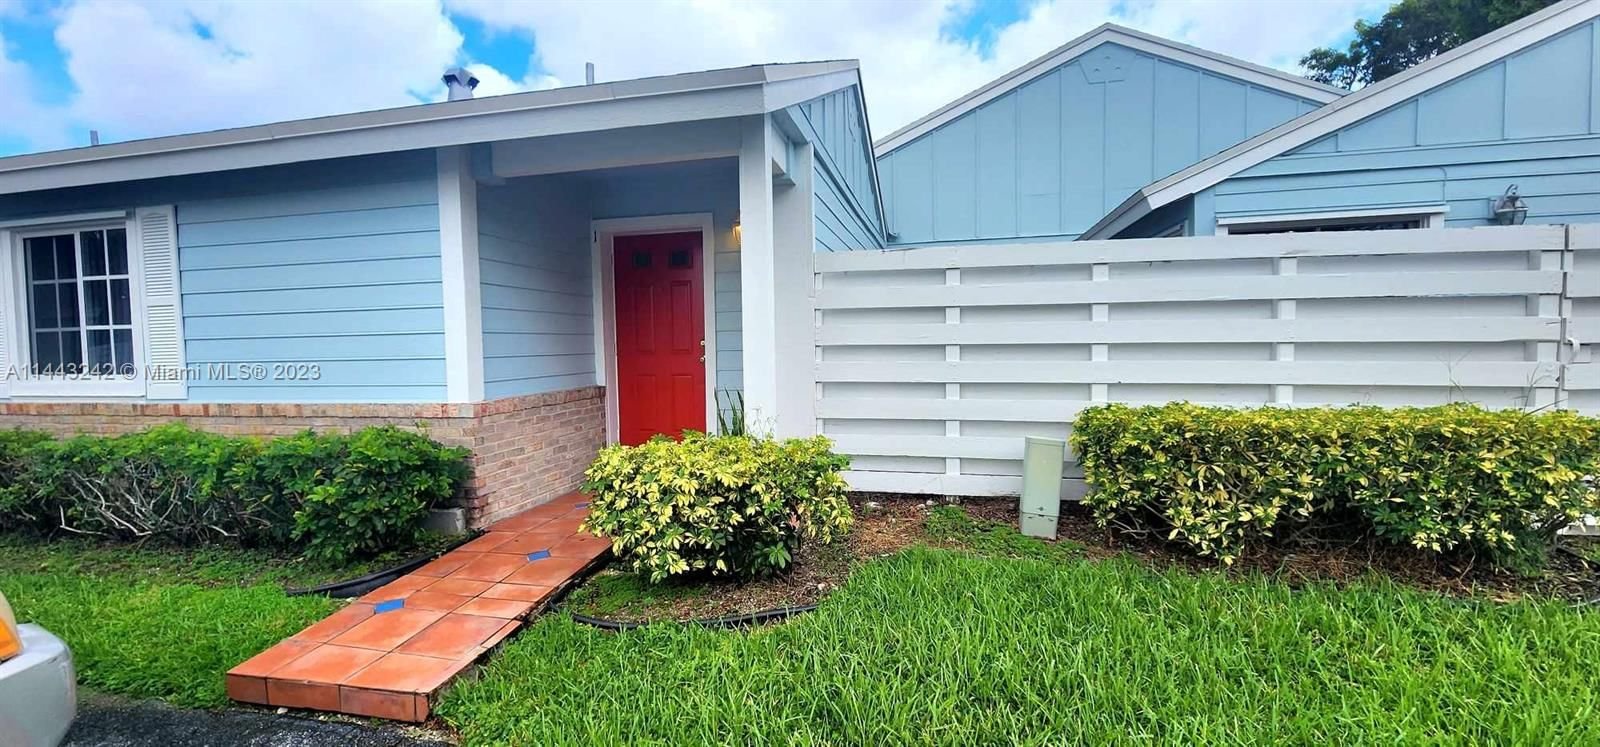 Real estate property located at 13741 149th Cir Ln #1-42, Miami-Dade County, VILG HOMES COUNTRY WALK C, Miami, FL